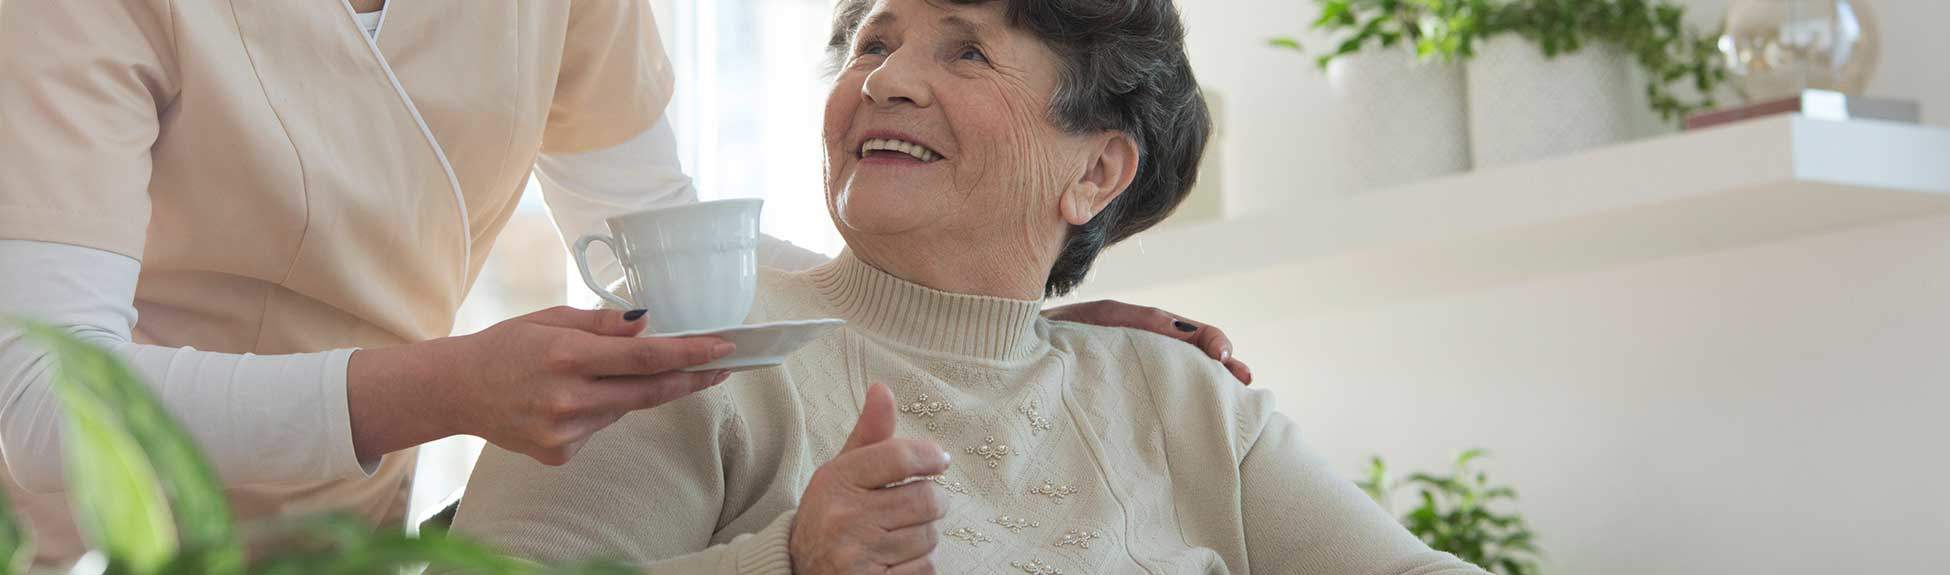 Premier Assisted Living Nurse serving tea to senior woman smiling